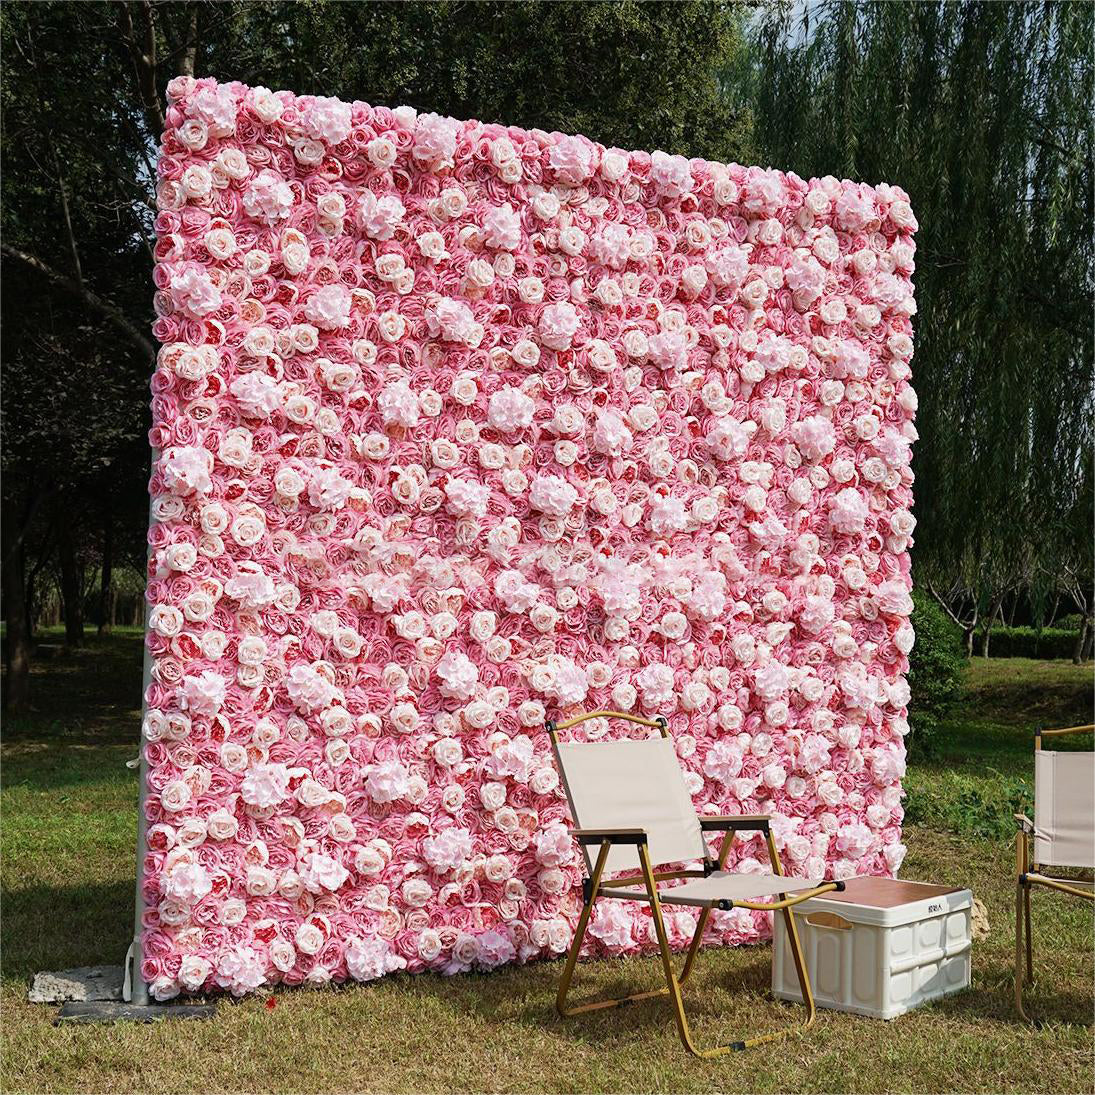 3D Artificial Flower Wall Arrangement Wedding Party Birthday Backdrop Decor HQ3807